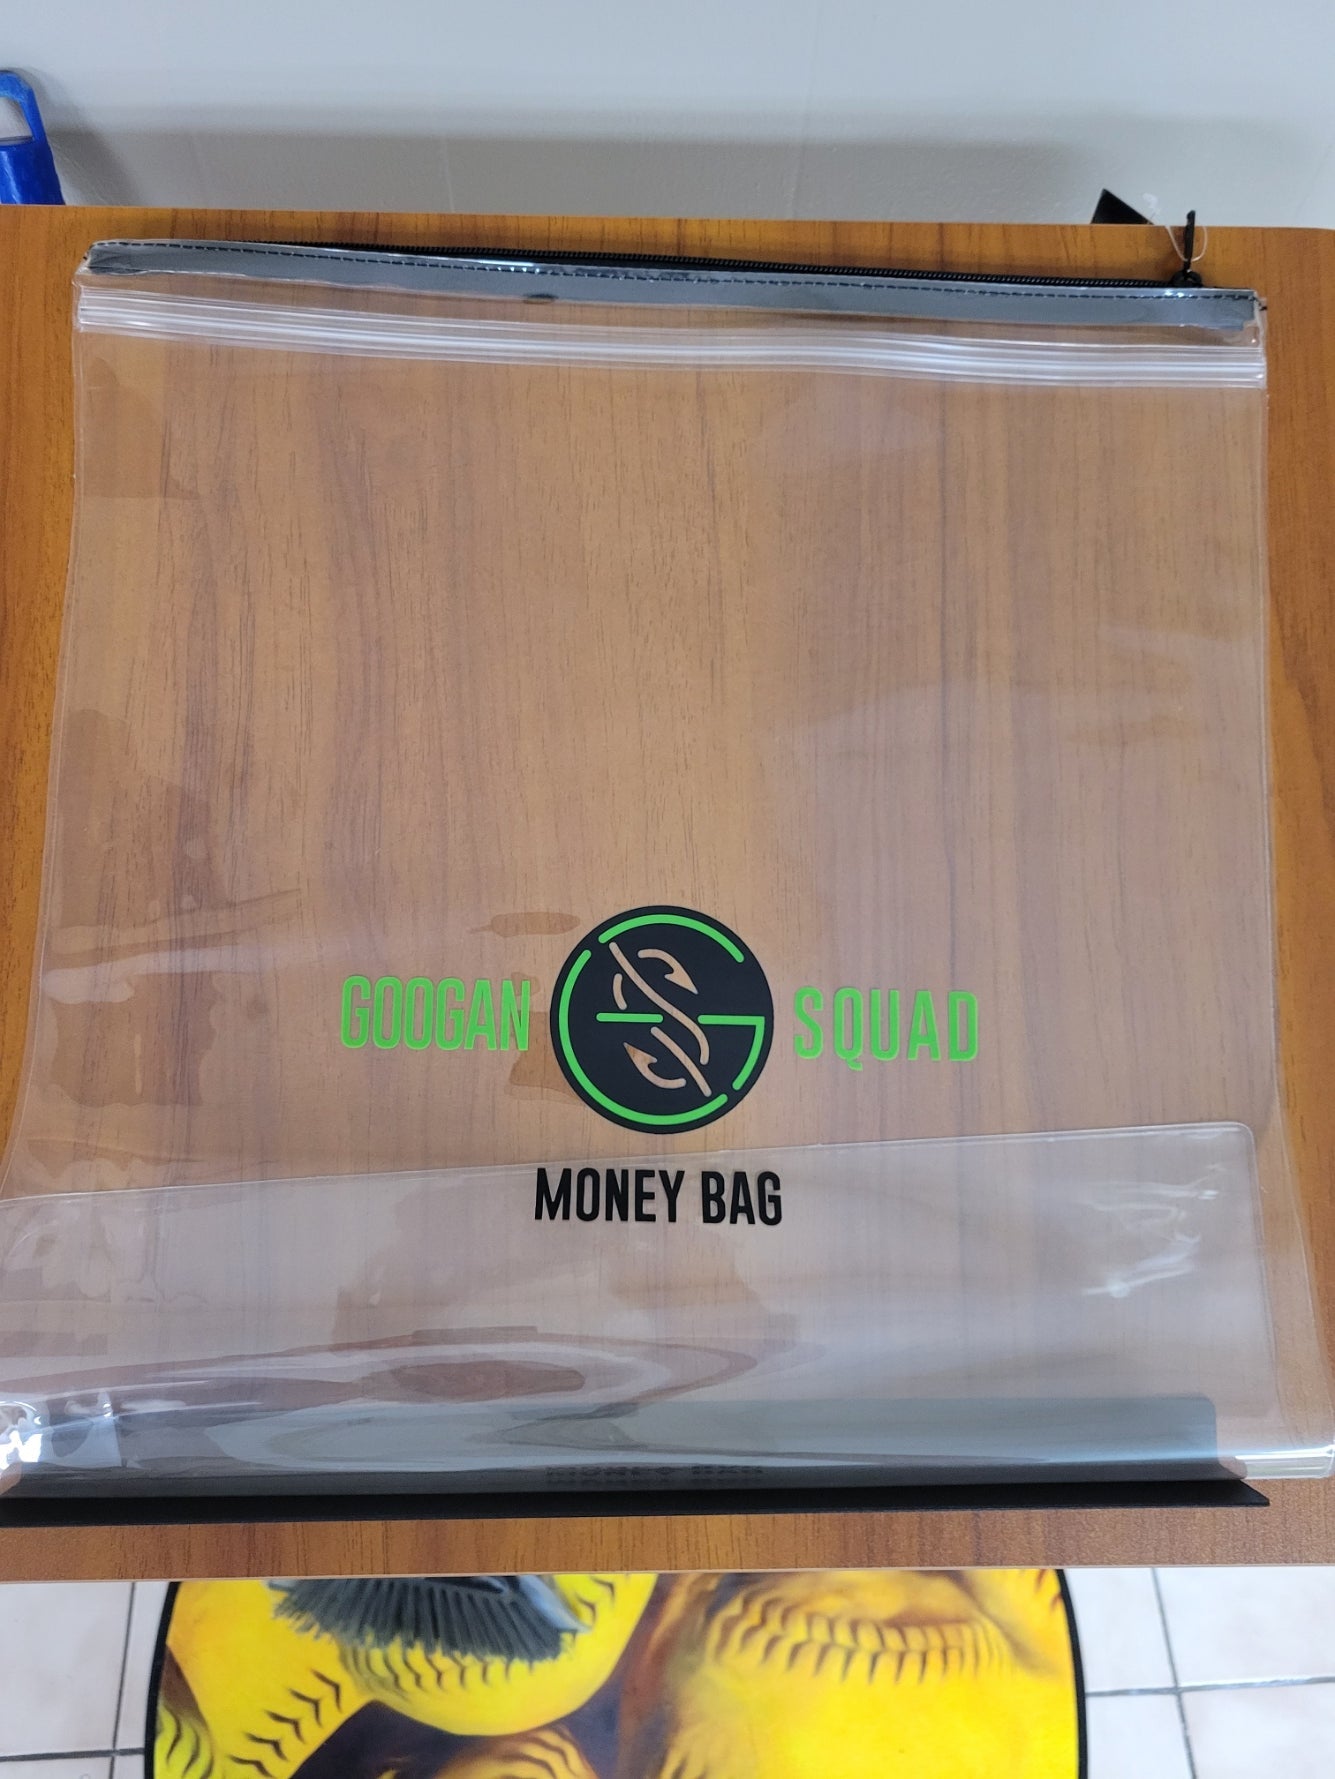 Googan Squad Money Bag 20x16